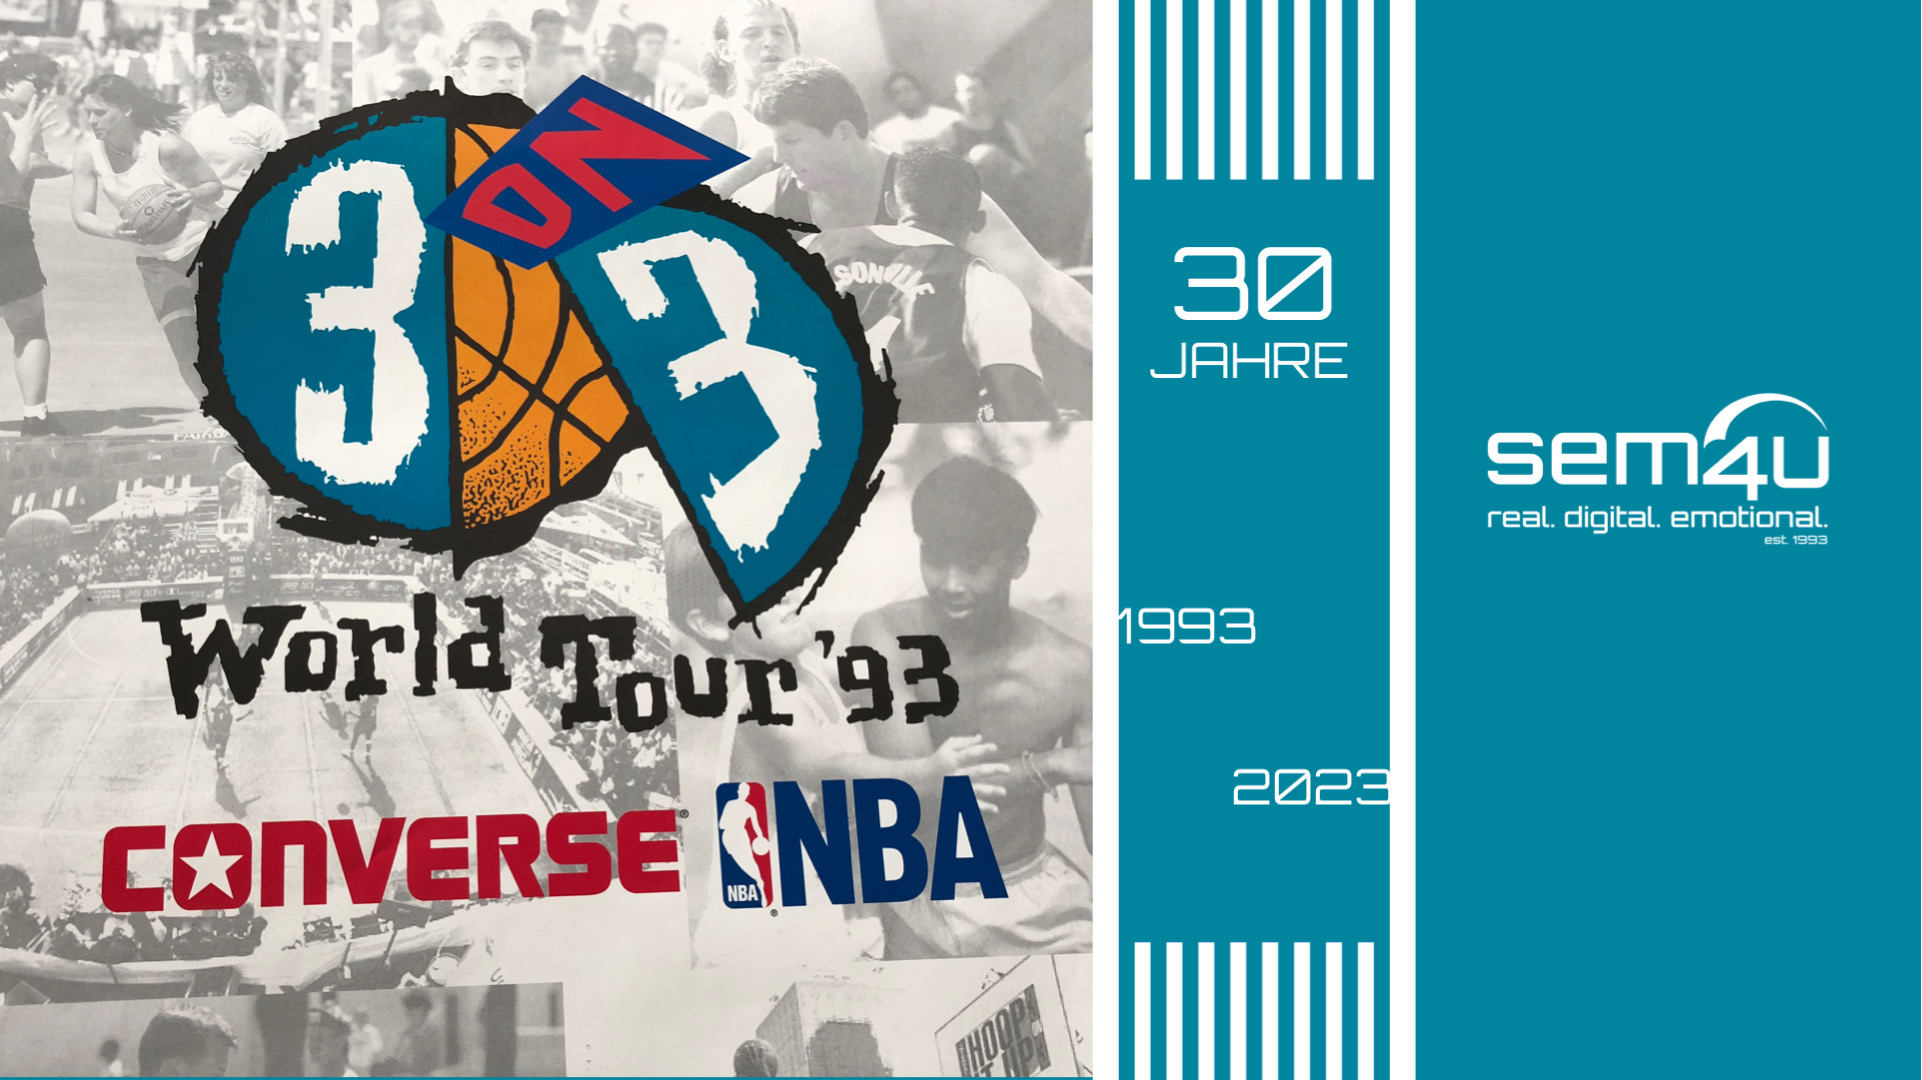 Converse NBA 3on3 Tour